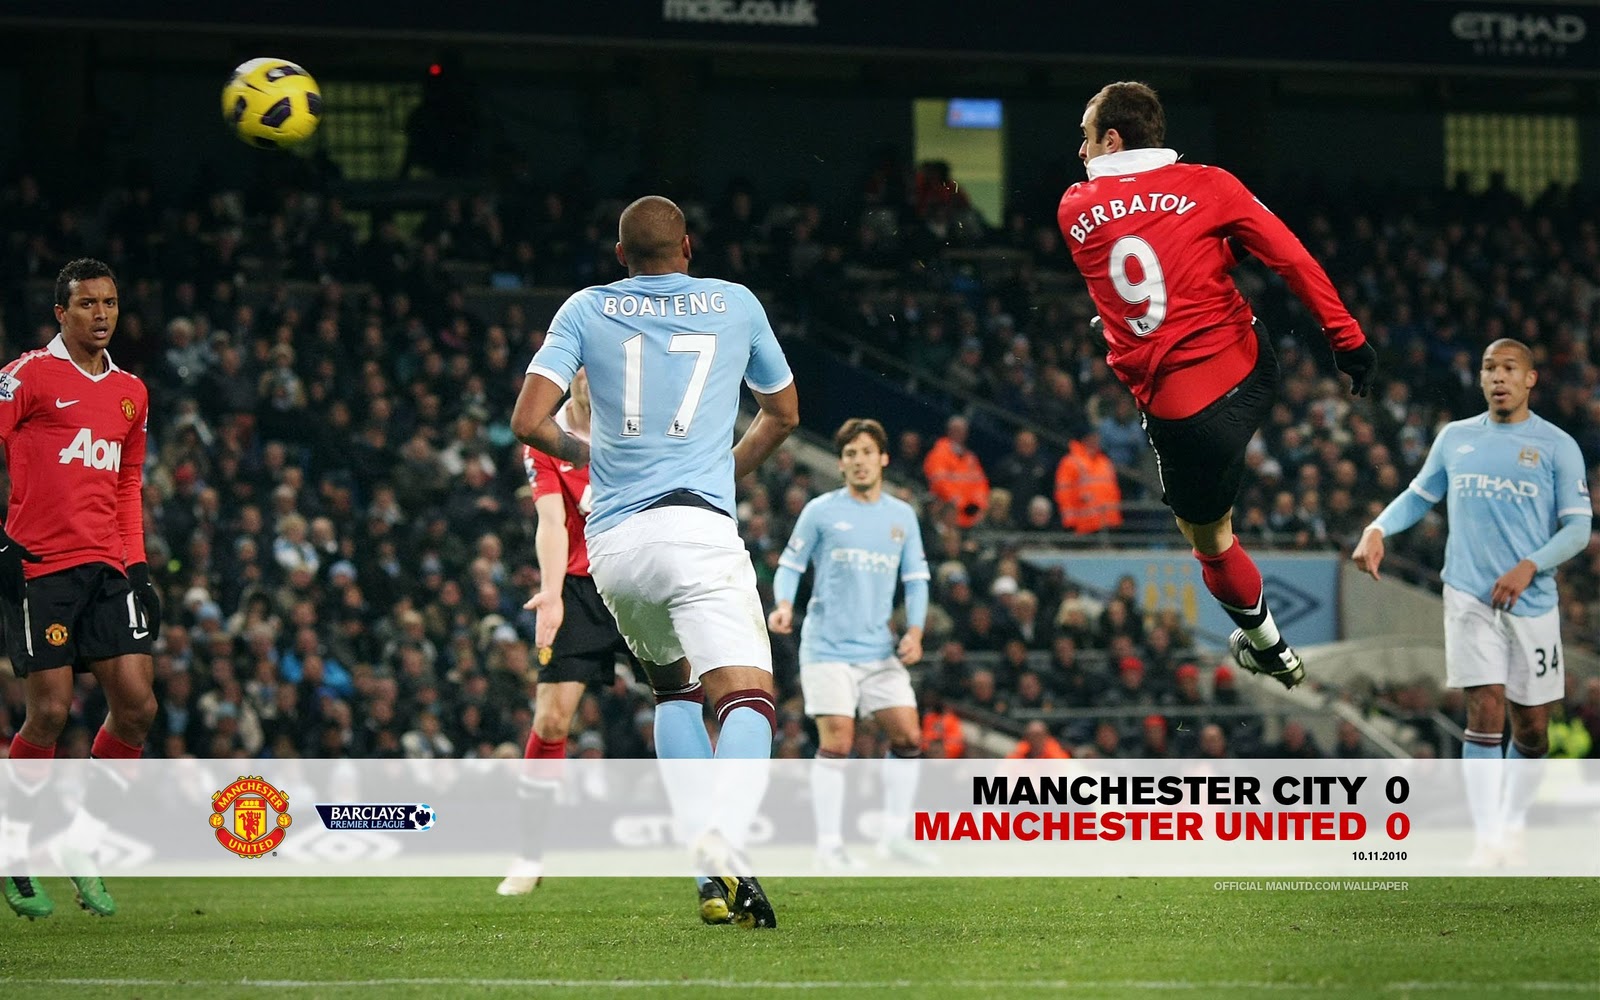 Manchester City Vs Manchester United Wallpaper 2010/11 Man United | Malaysia No. 1 Fan